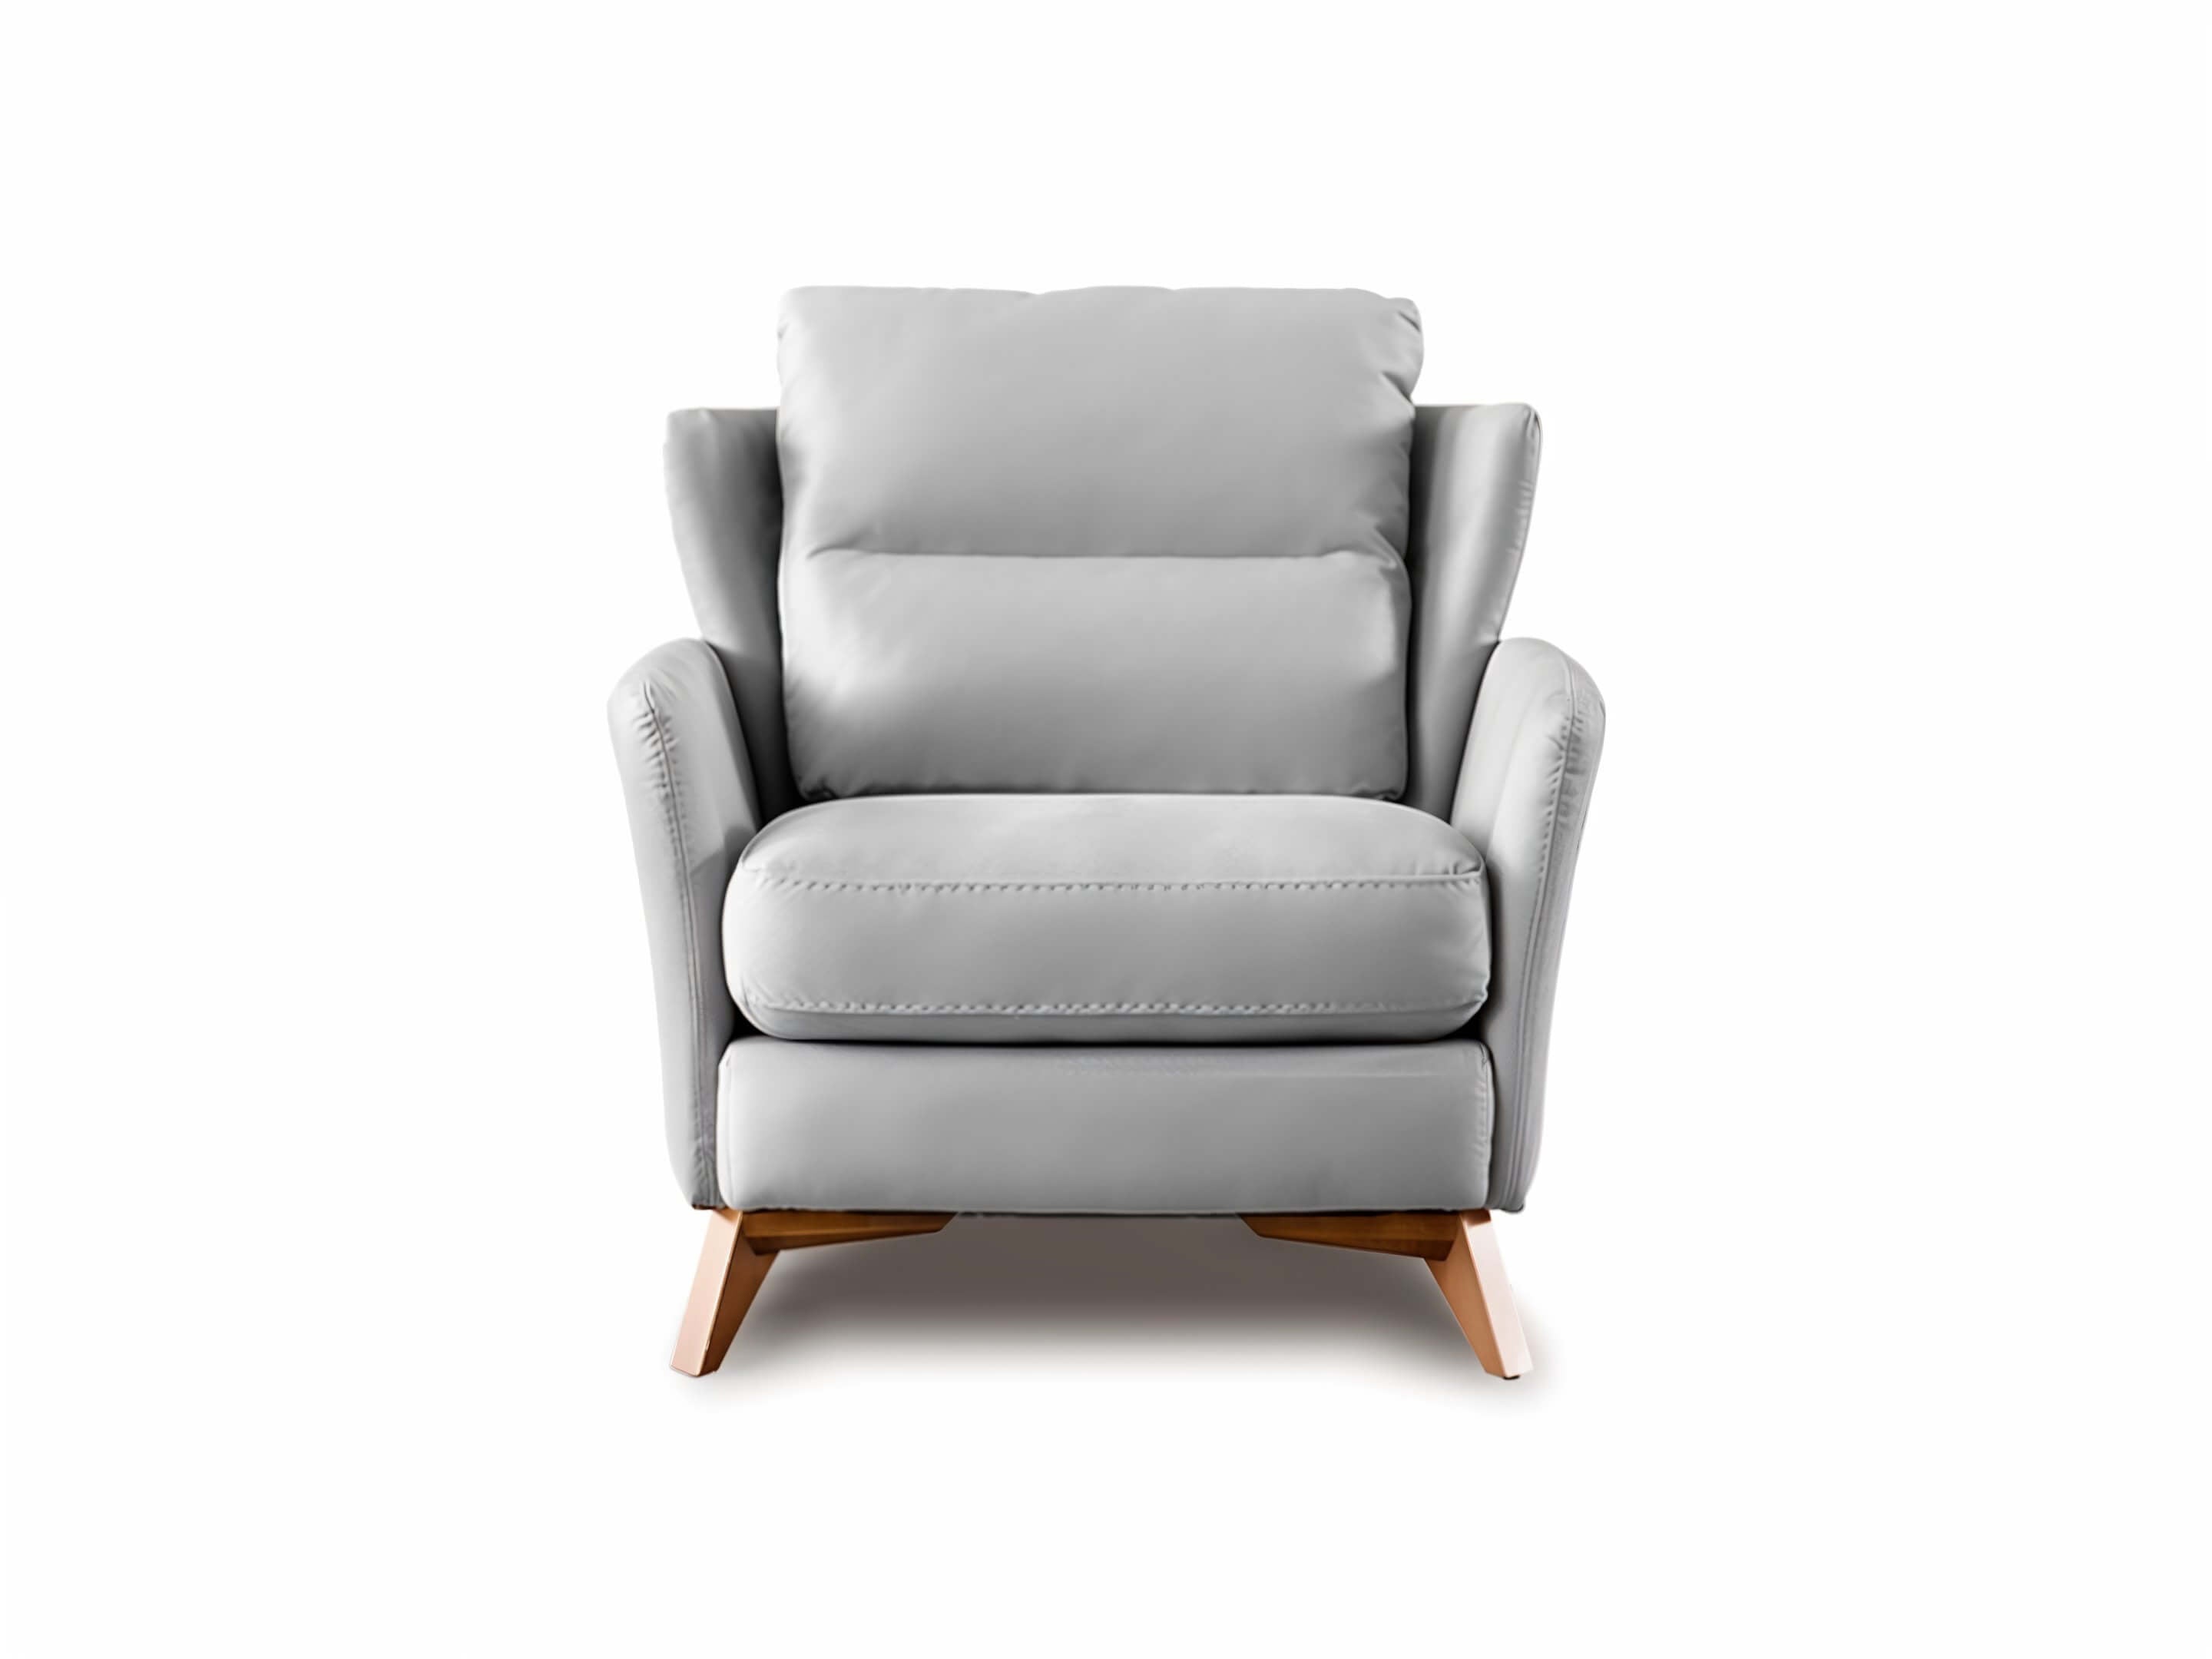 variant armchair light grey- Lux Furniture / Light grey